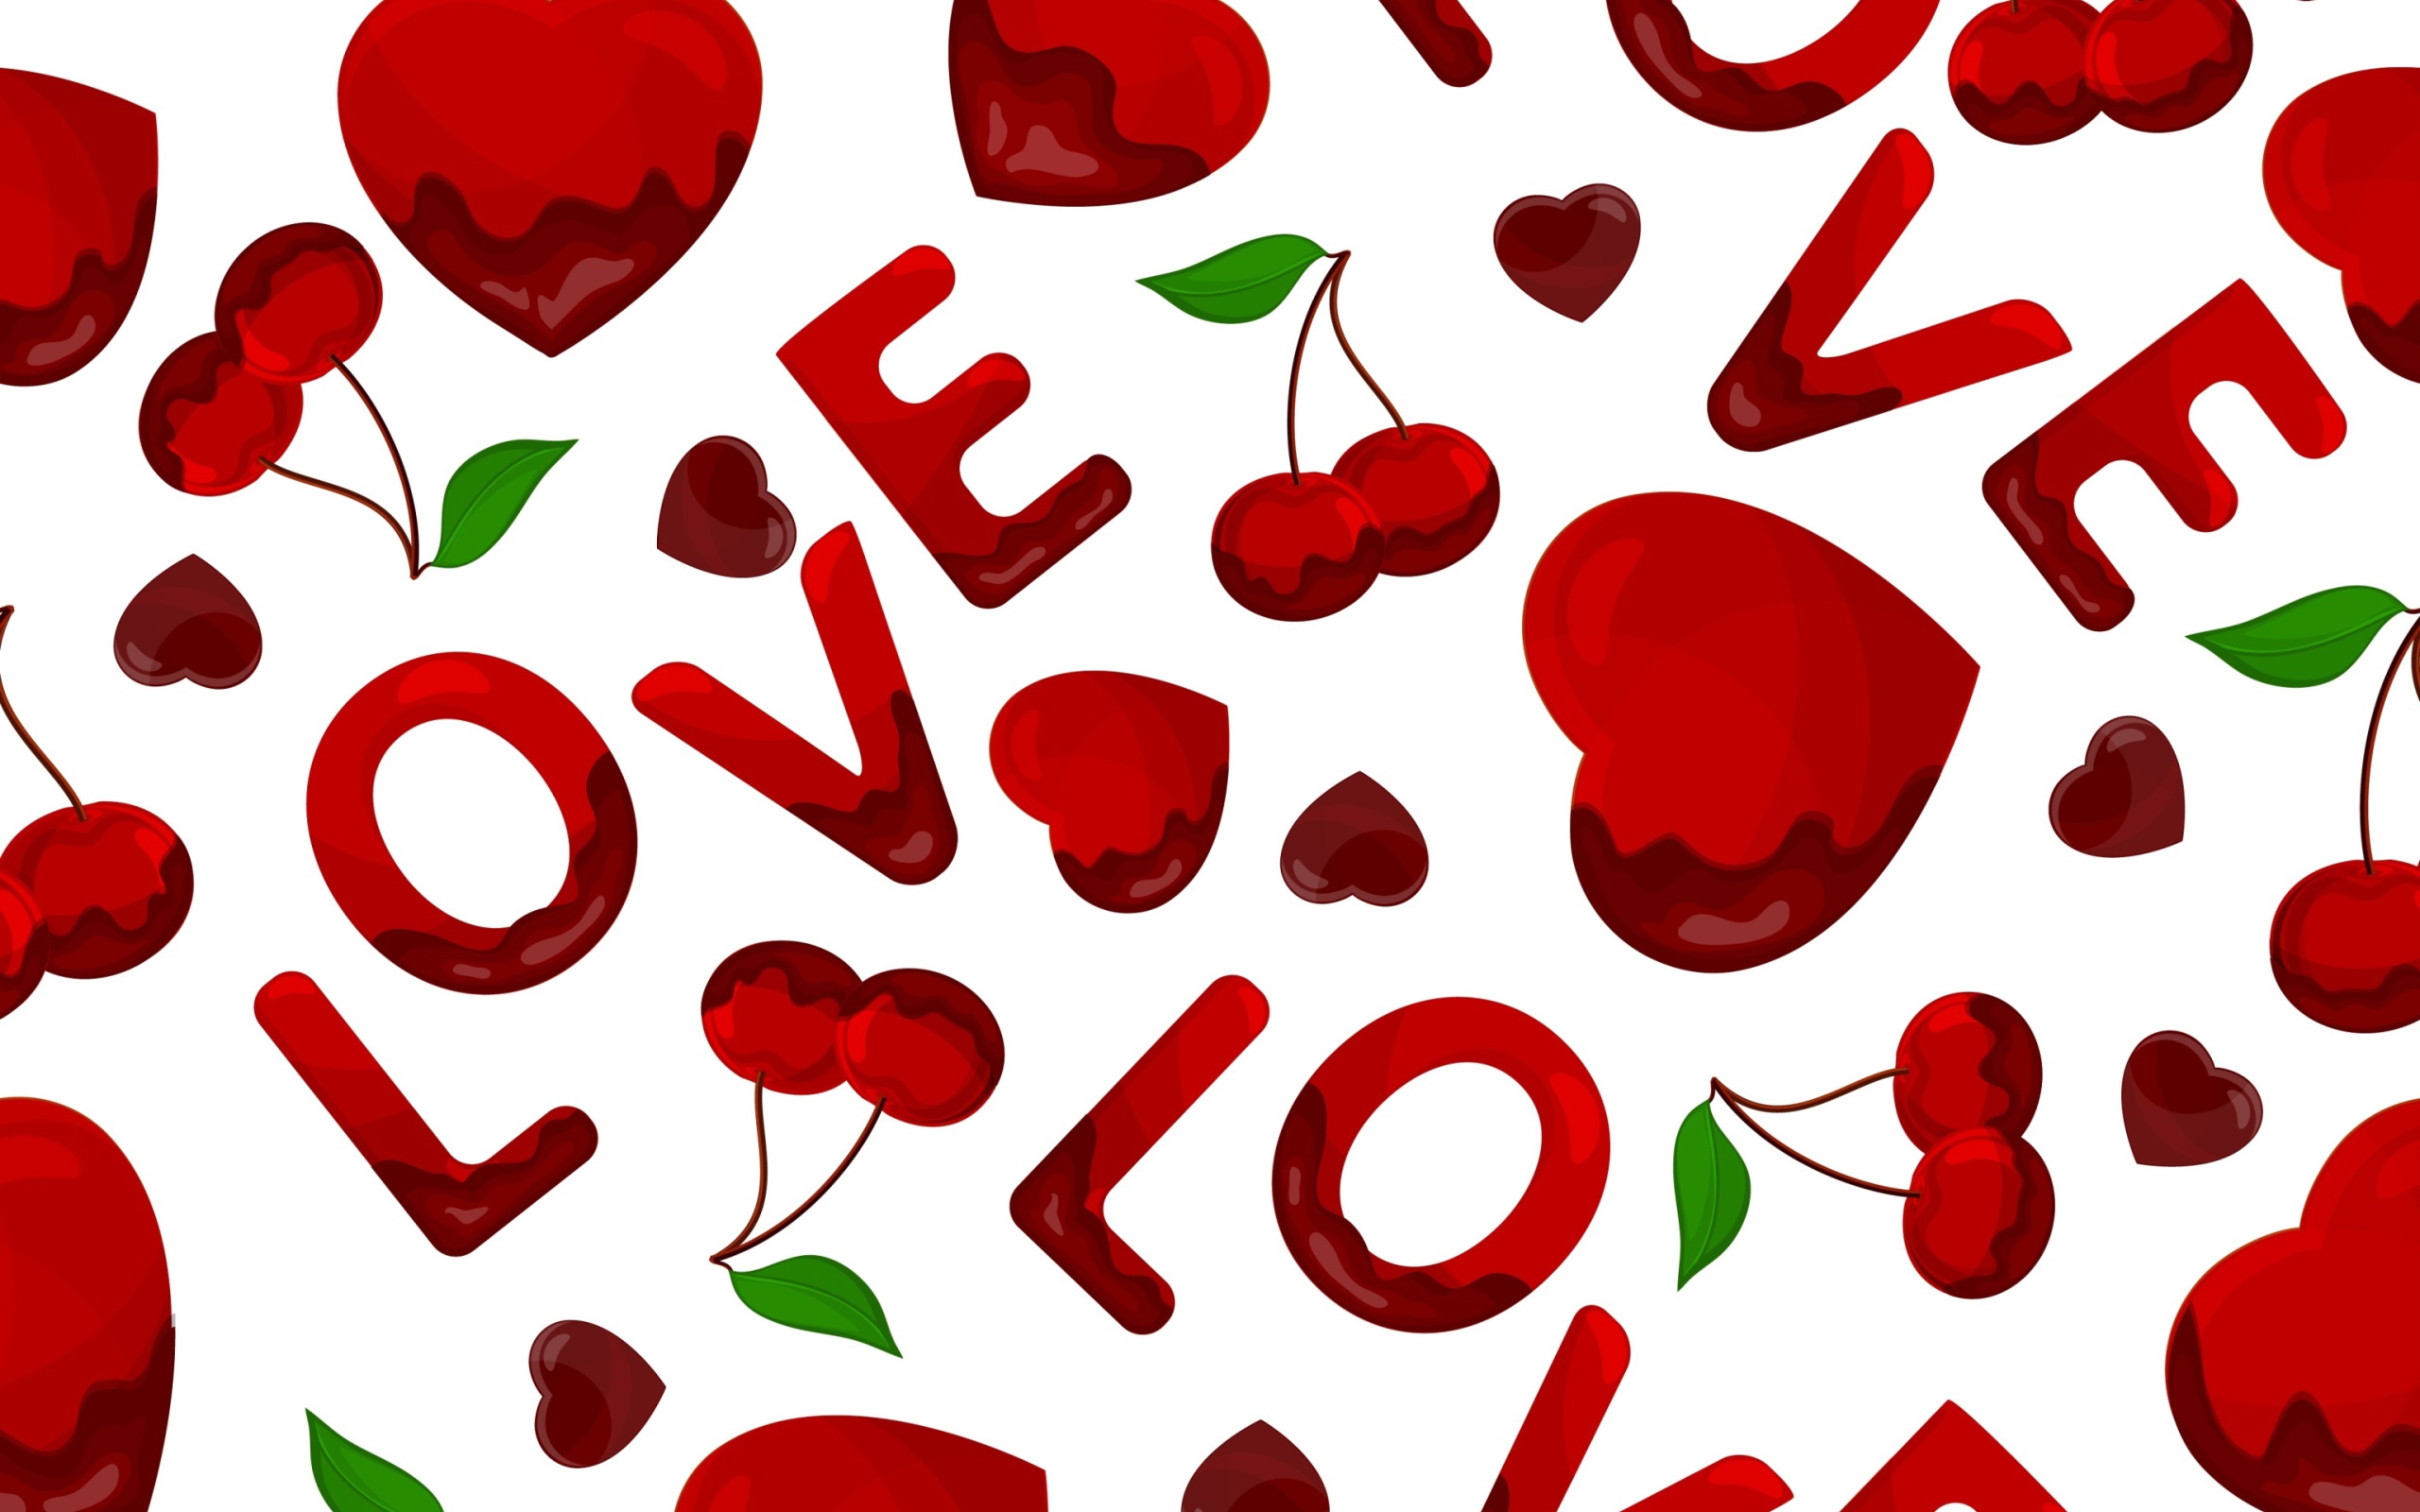 Love Cherries and Hearts wallpaper 2560x1600